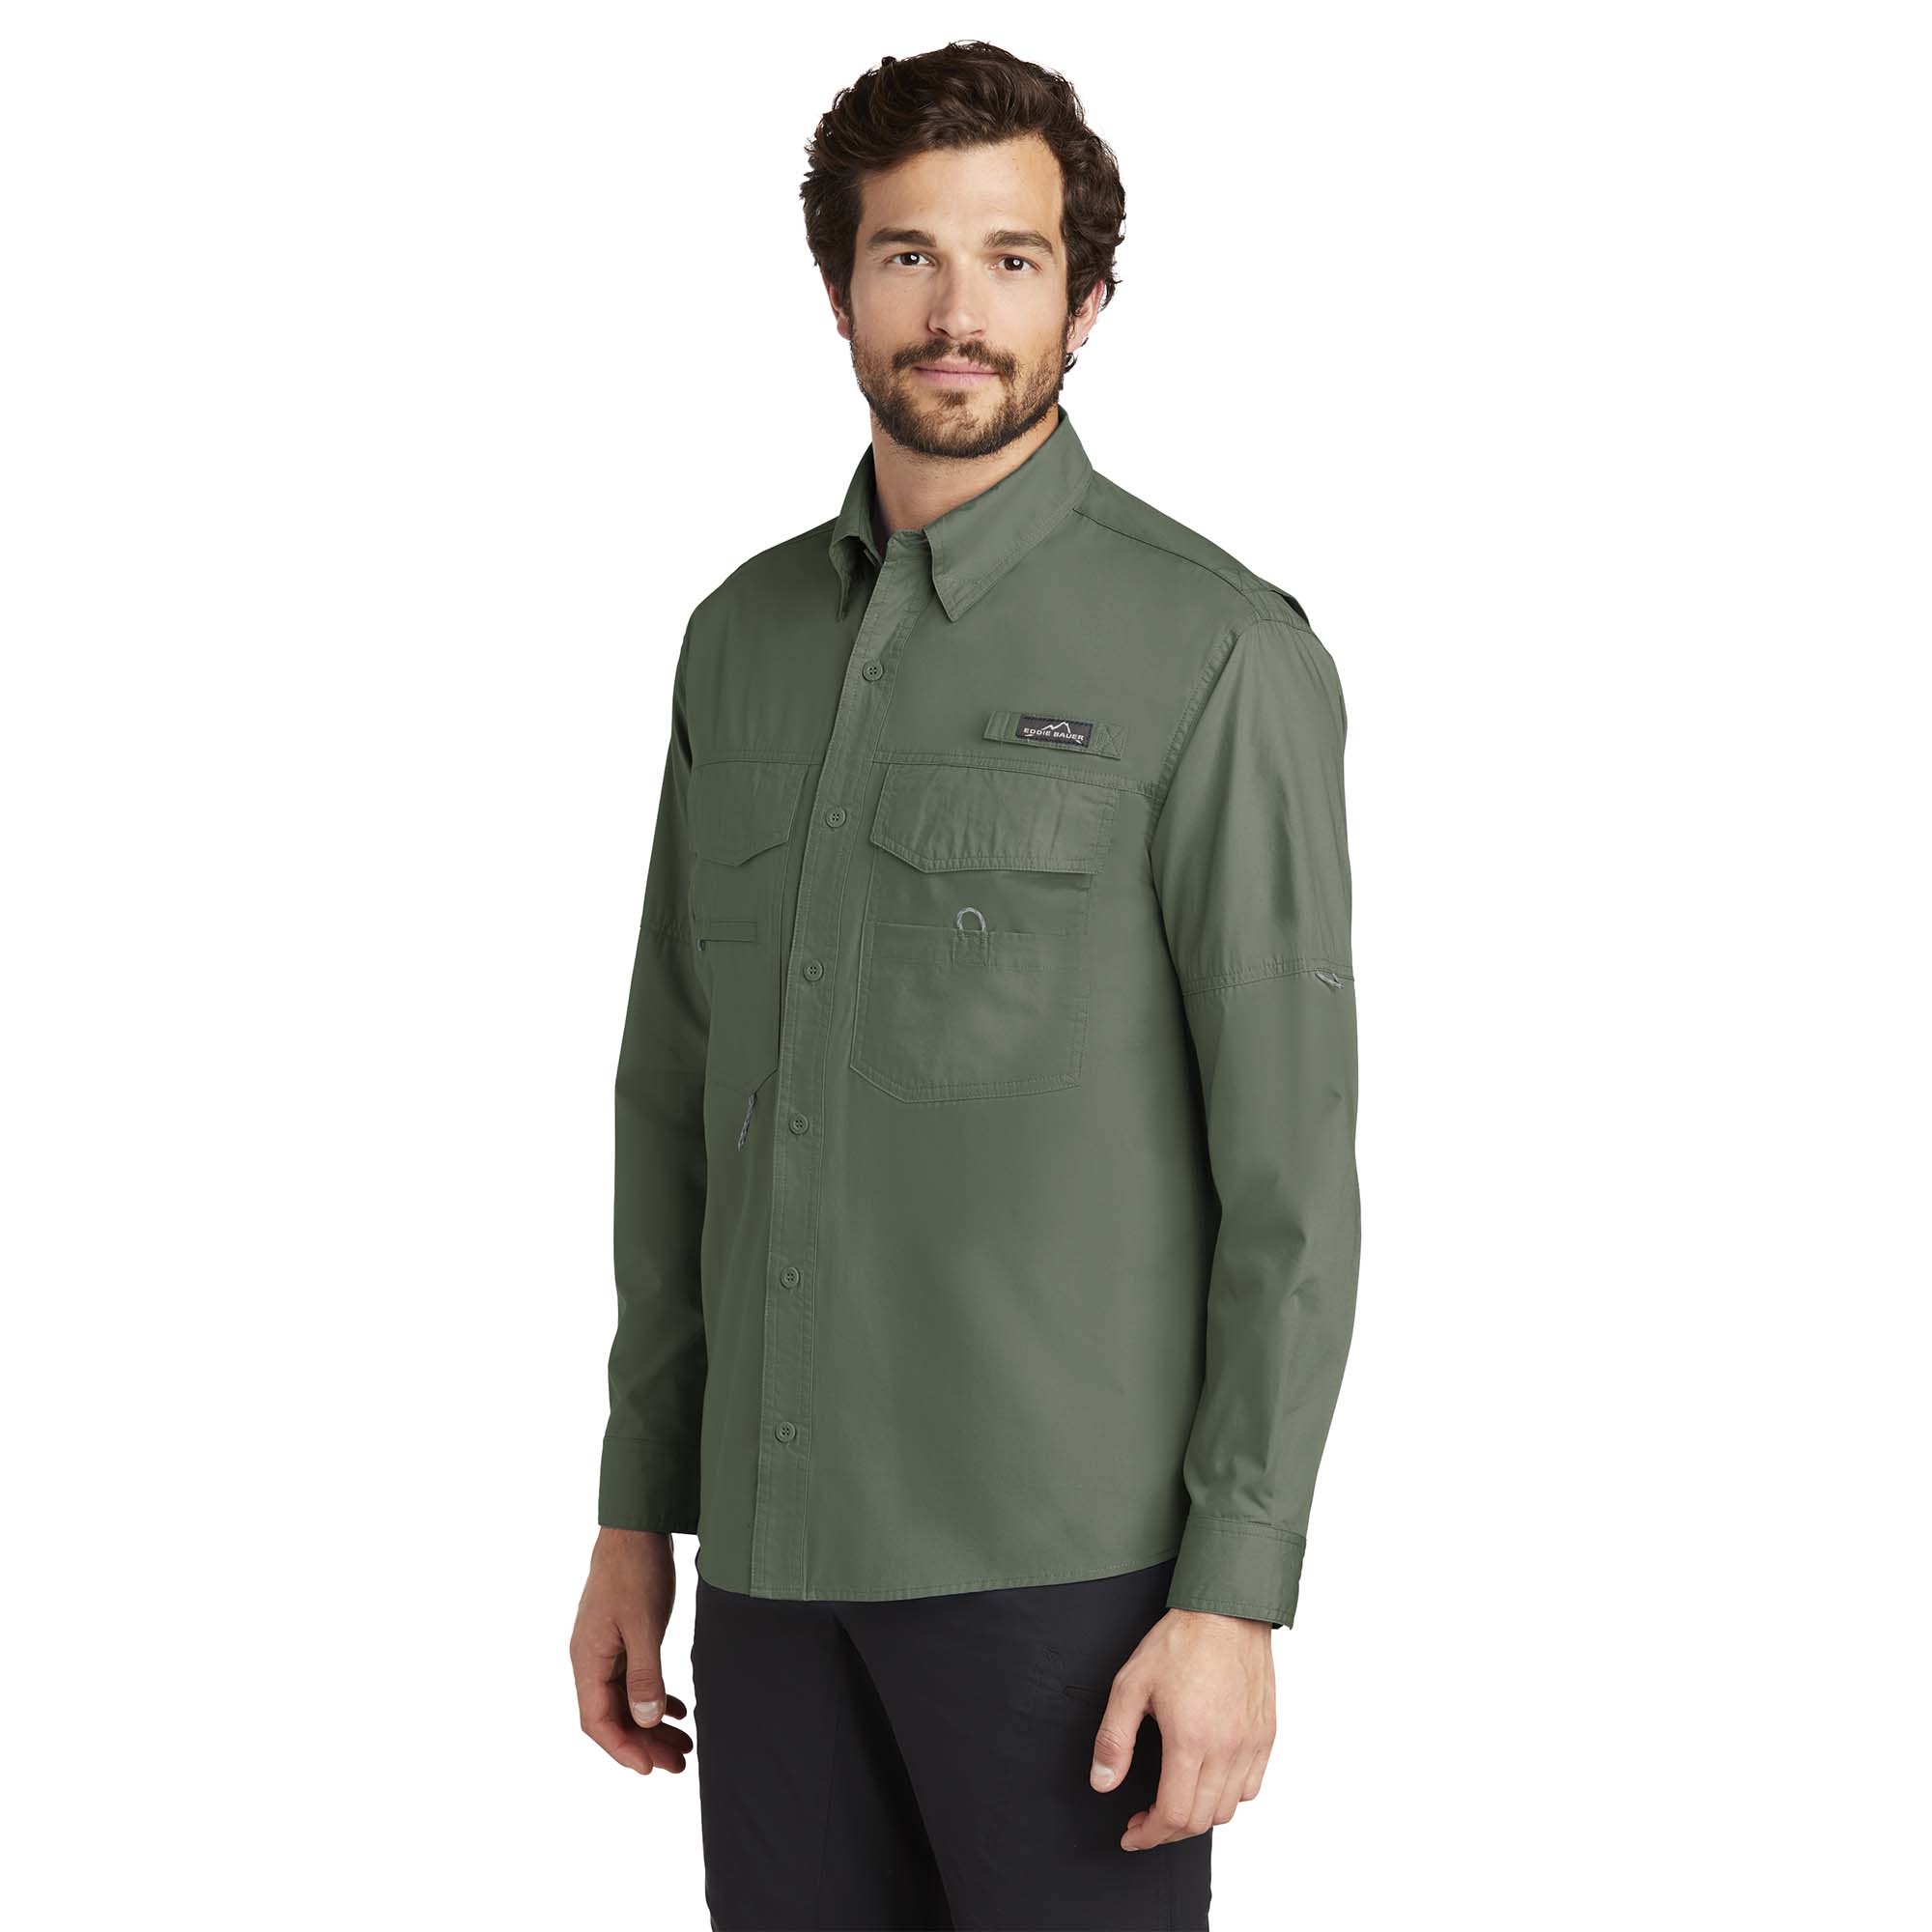 Eddie Bauer EB606 Long Sleeve Fishing Shirt - Seagrass Green